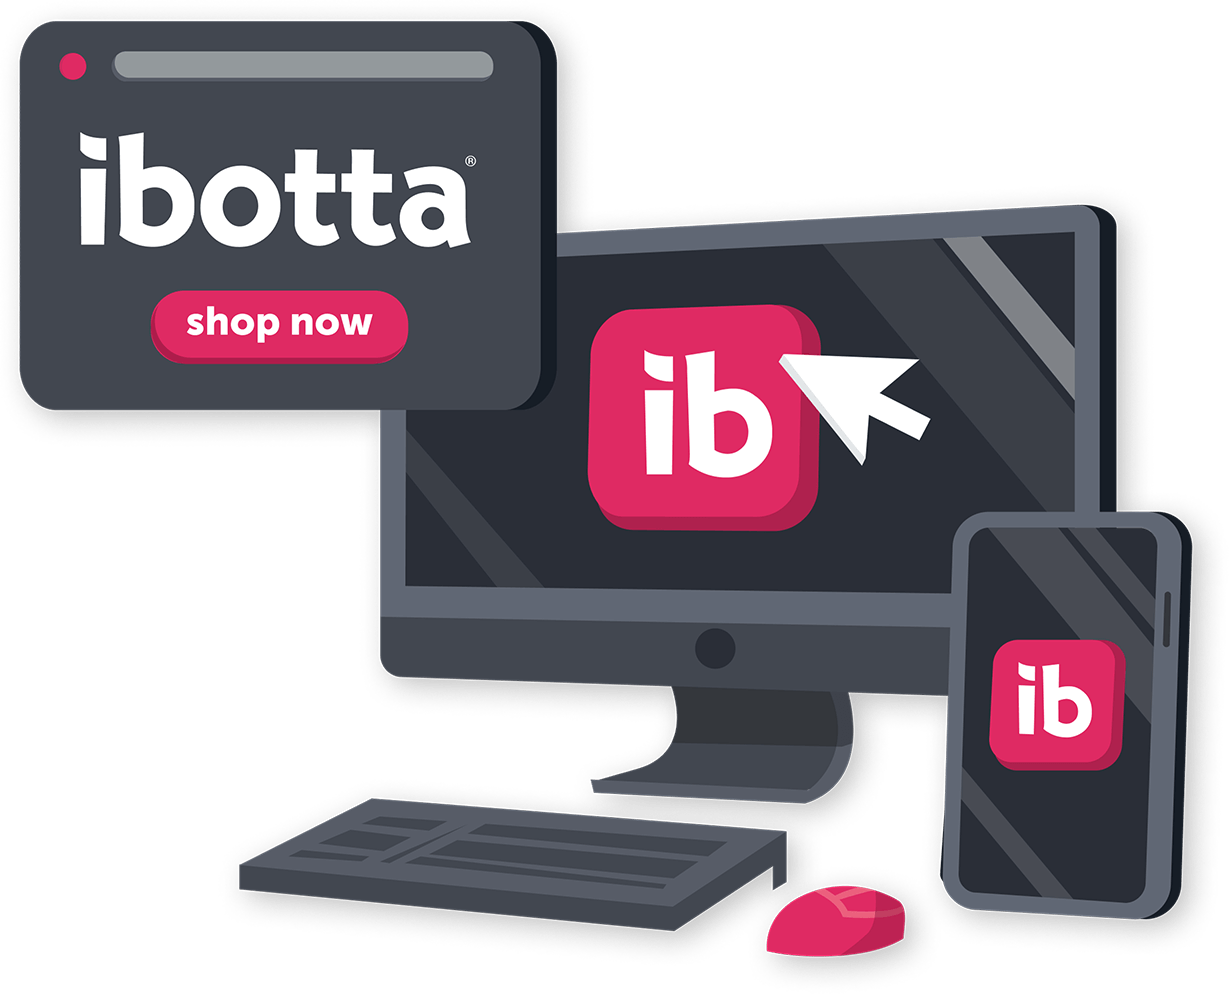 Ibotta shop now 